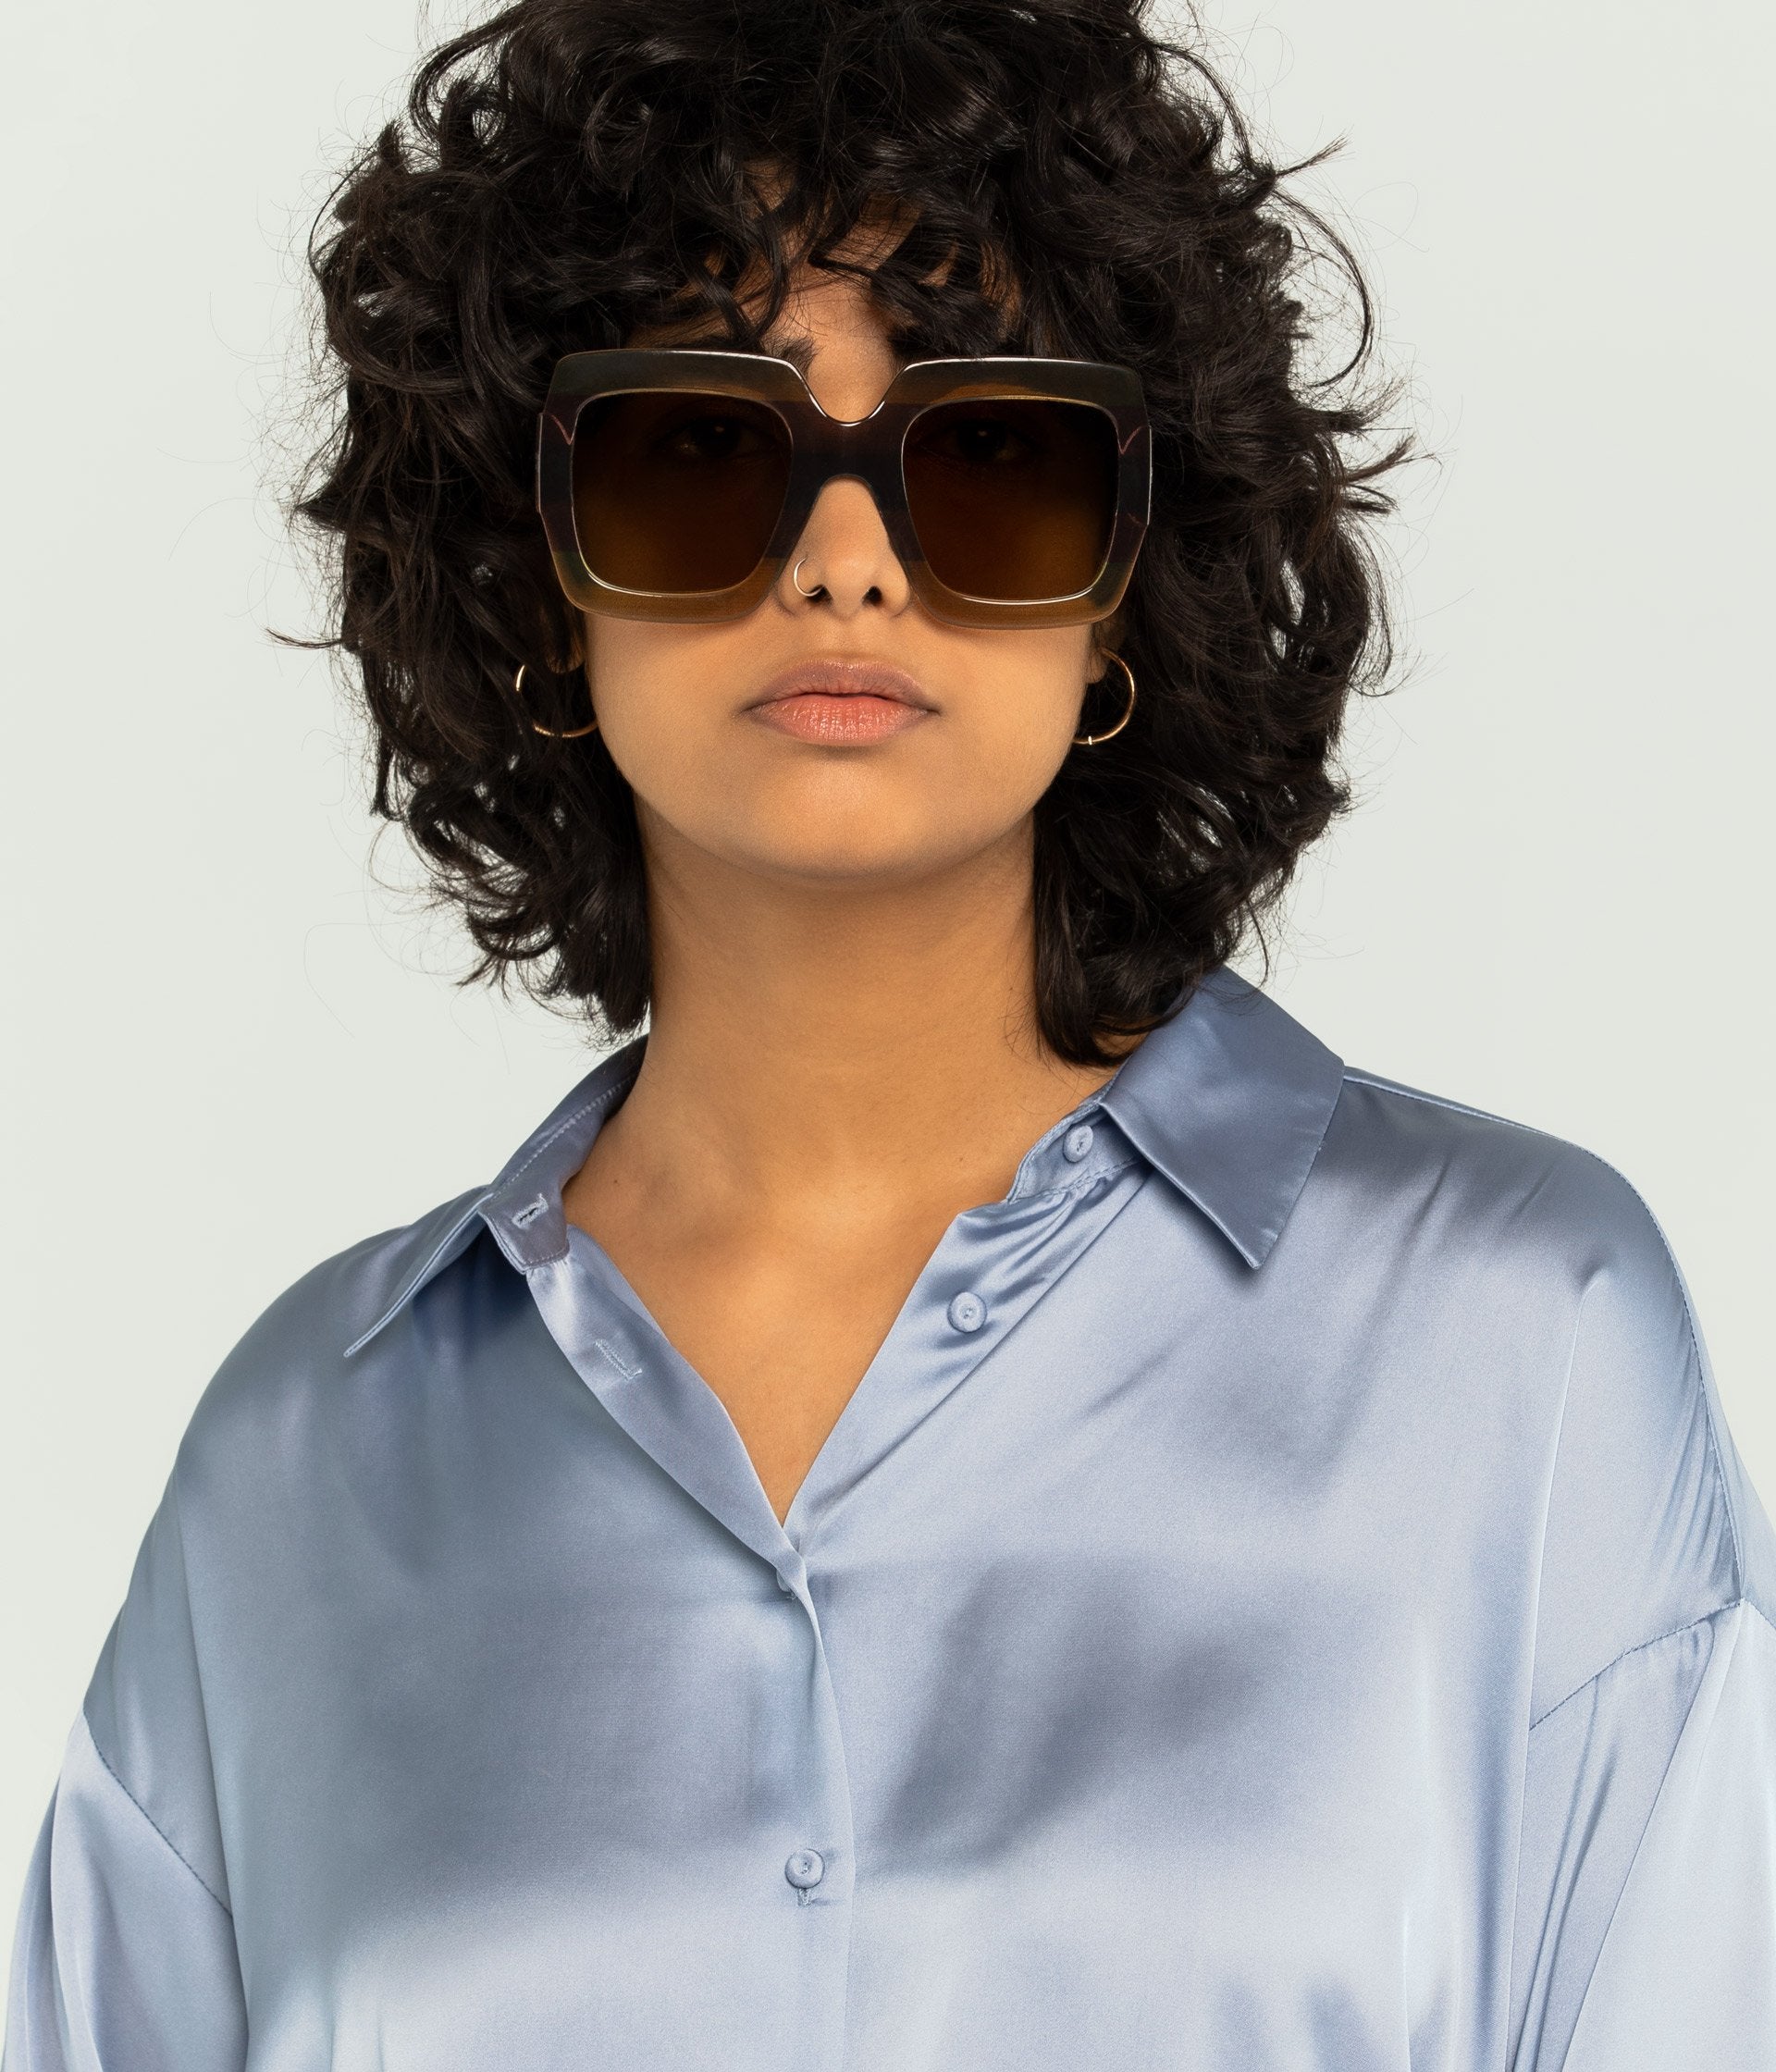 AVILA Square Sunglasses | Color: Brown - variant::brown